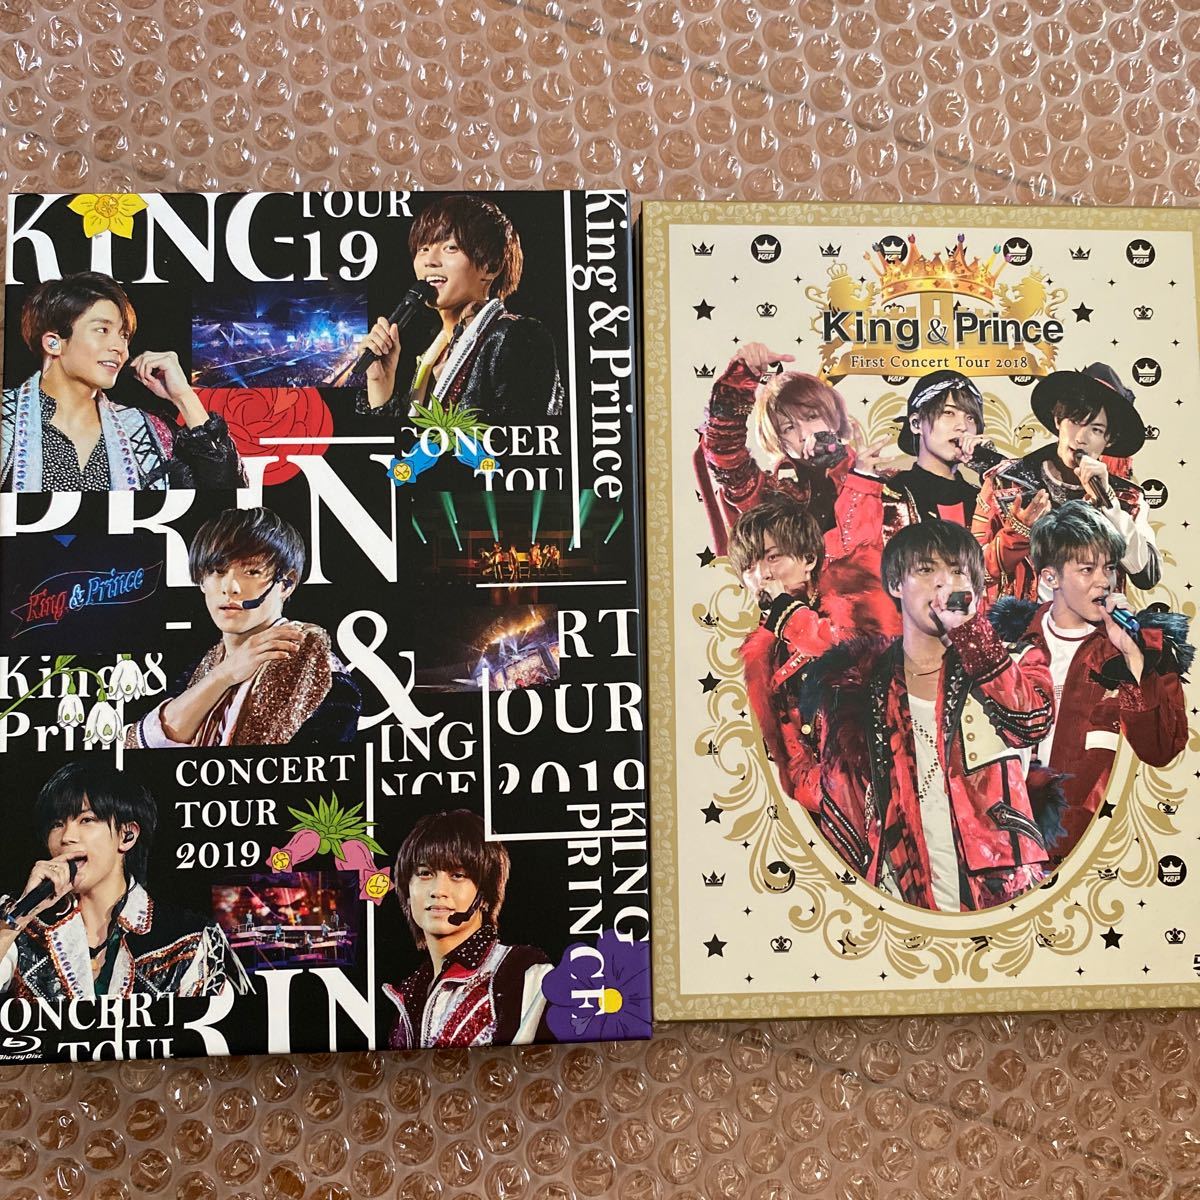 King & Prince 初回限定盤 2018. DVD 2019．Blu ray DVD、映像ソフト